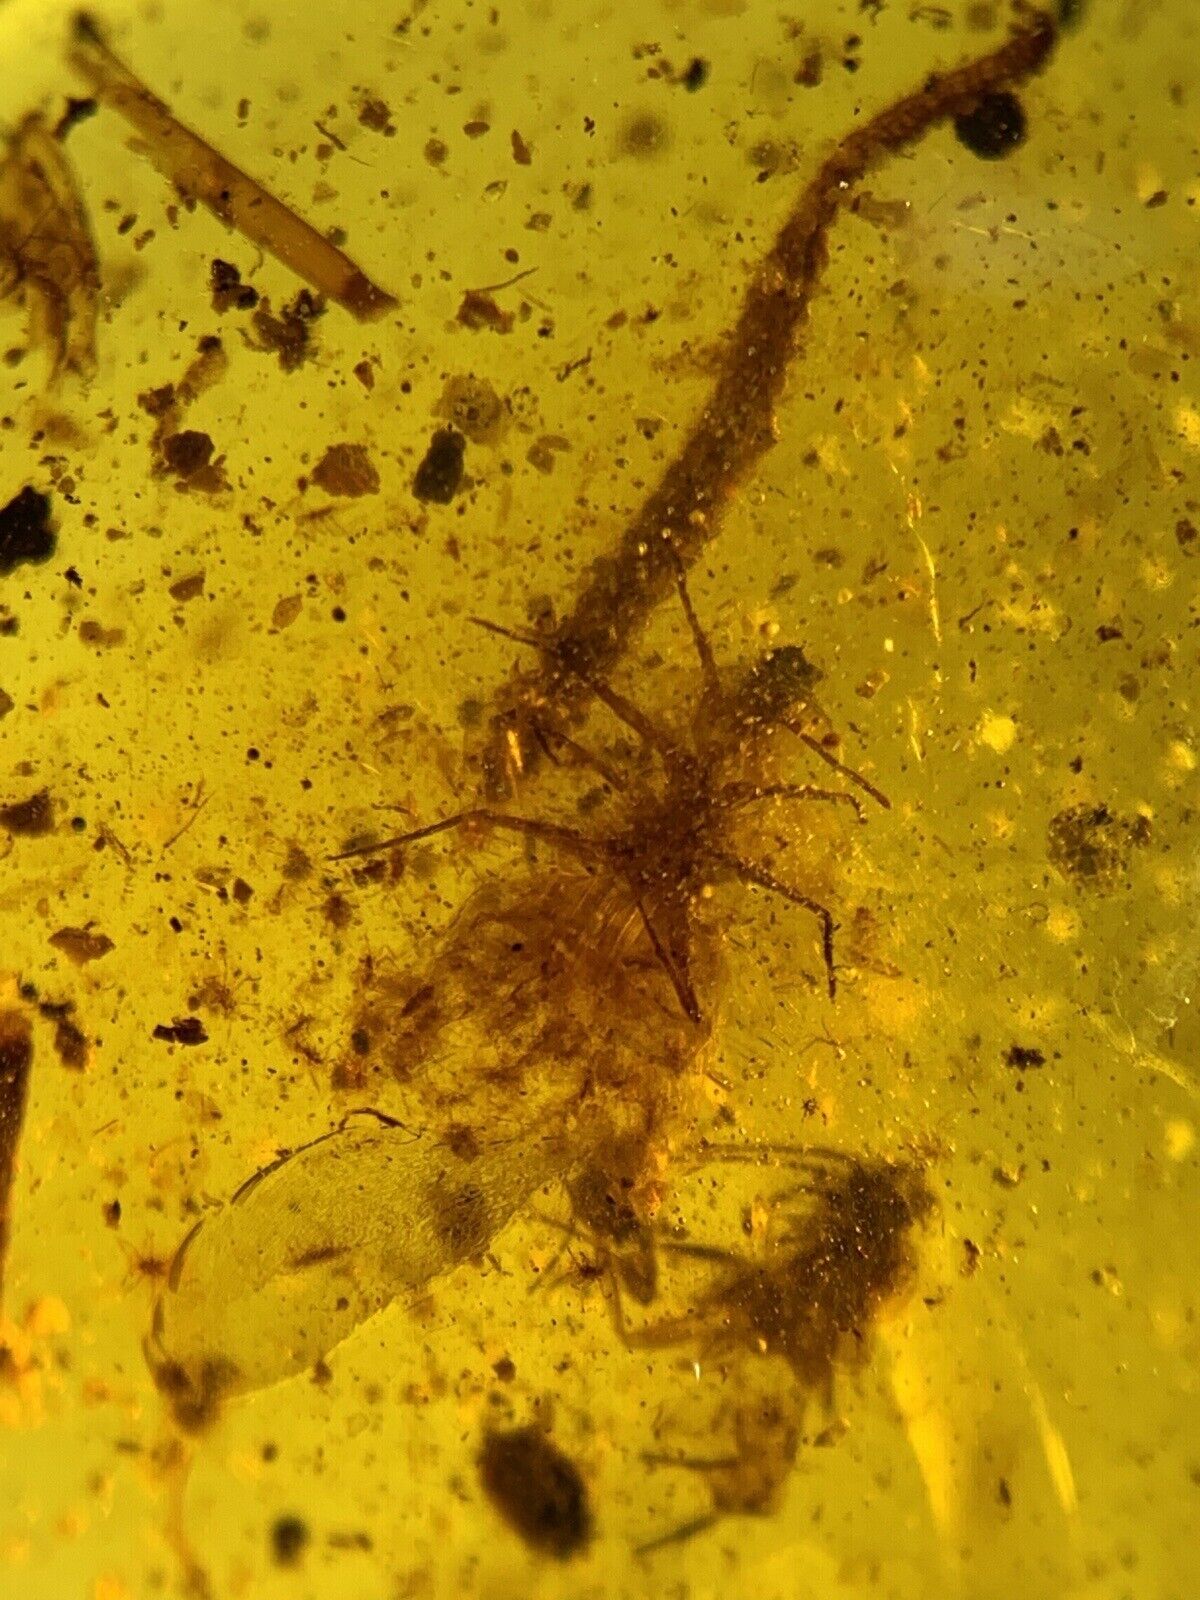 Coccidae Child-rearing behavior burmite Cretaceous Amber fossil dinosaurs era